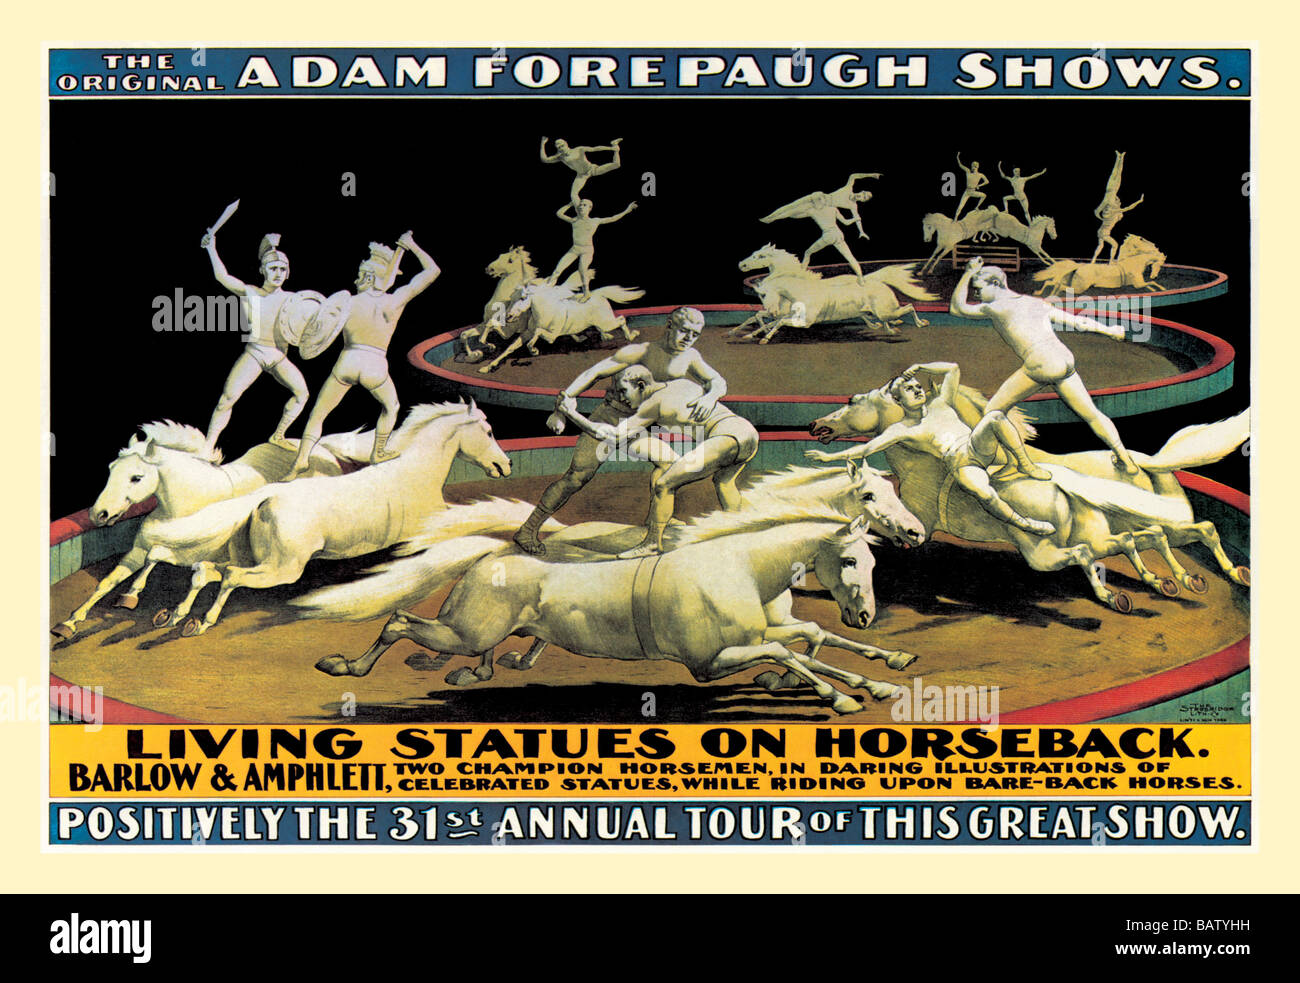 Living Statues on Horseback: The Original Adam Forepaugh Shows Stock Photo